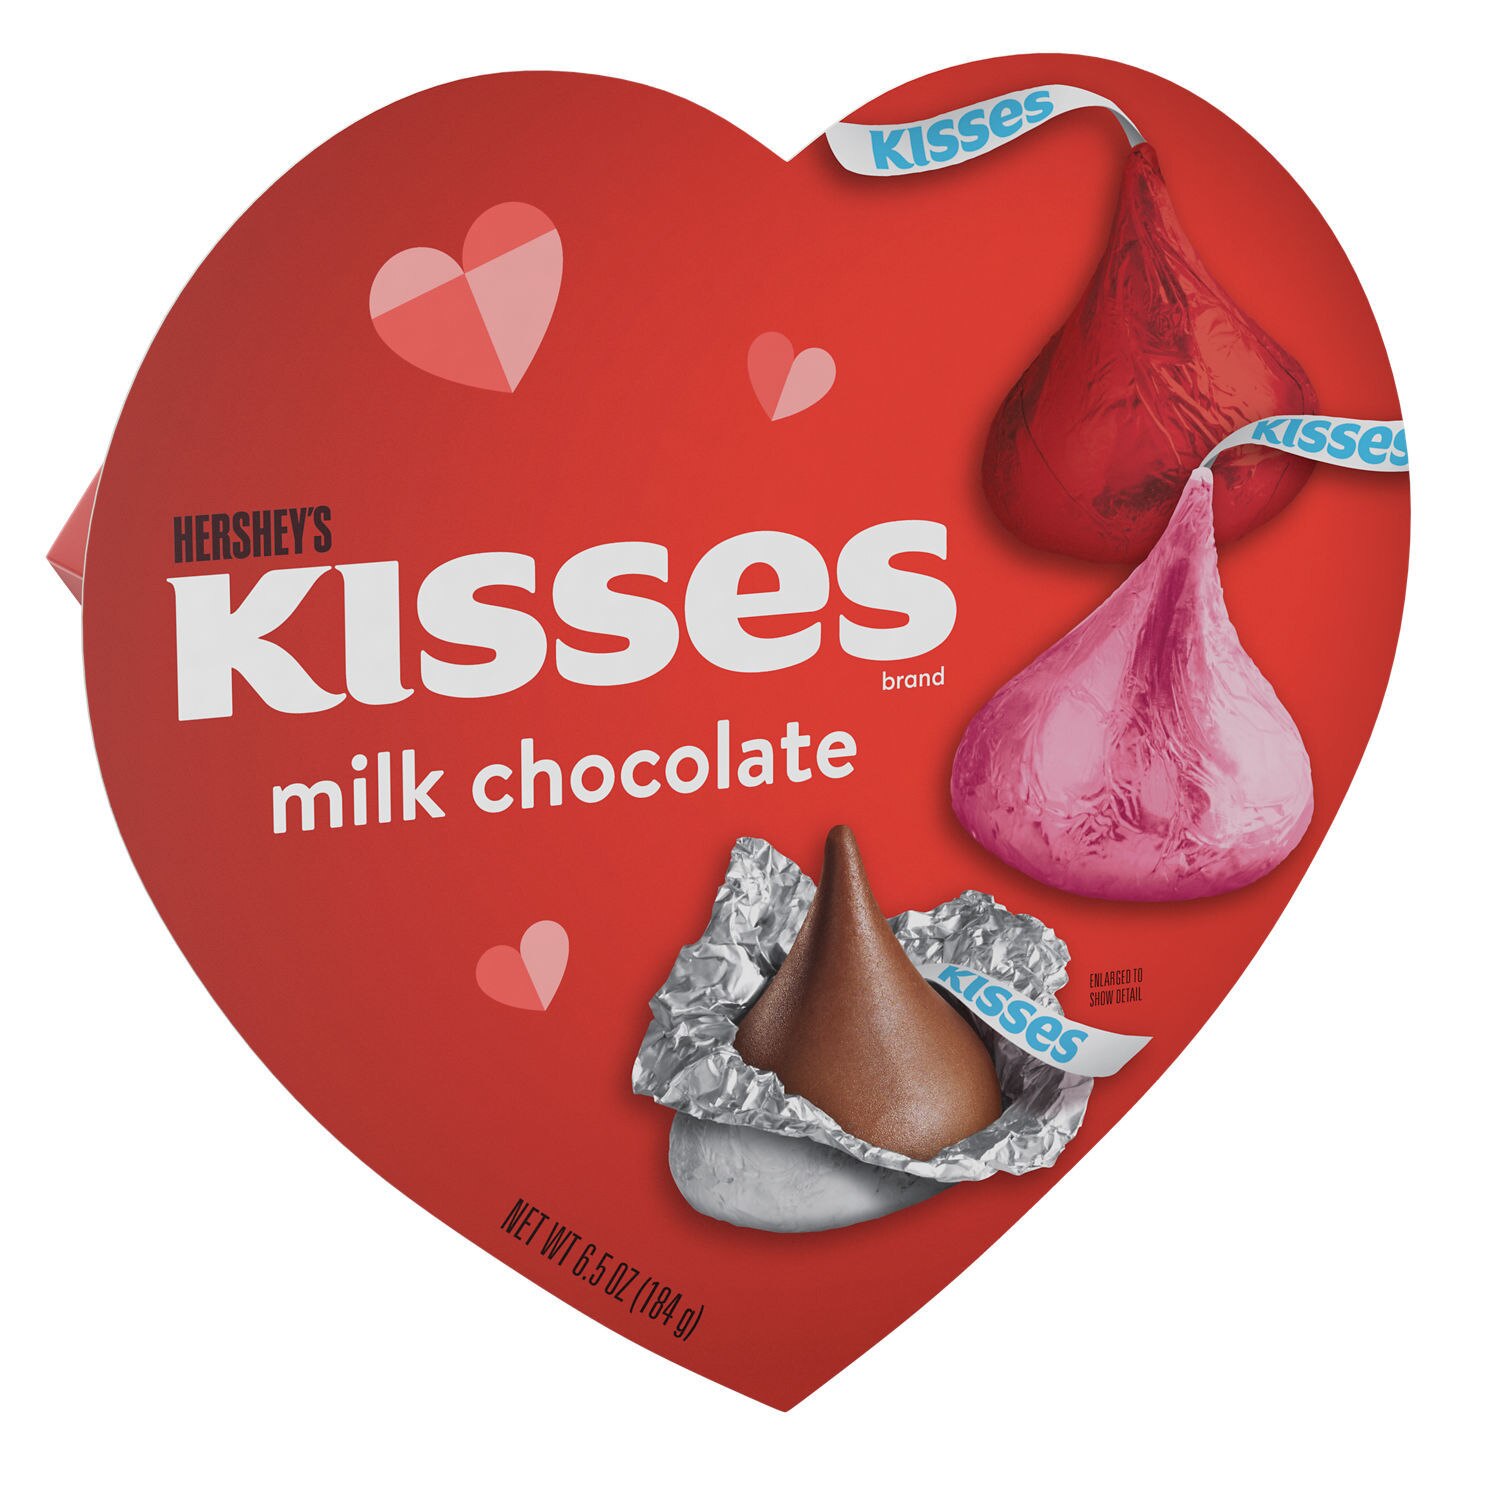 HERSHEY'S KISSES Milk Chocolate Candy, Valentine's Day Gift, 6.5 oz, Heart Box